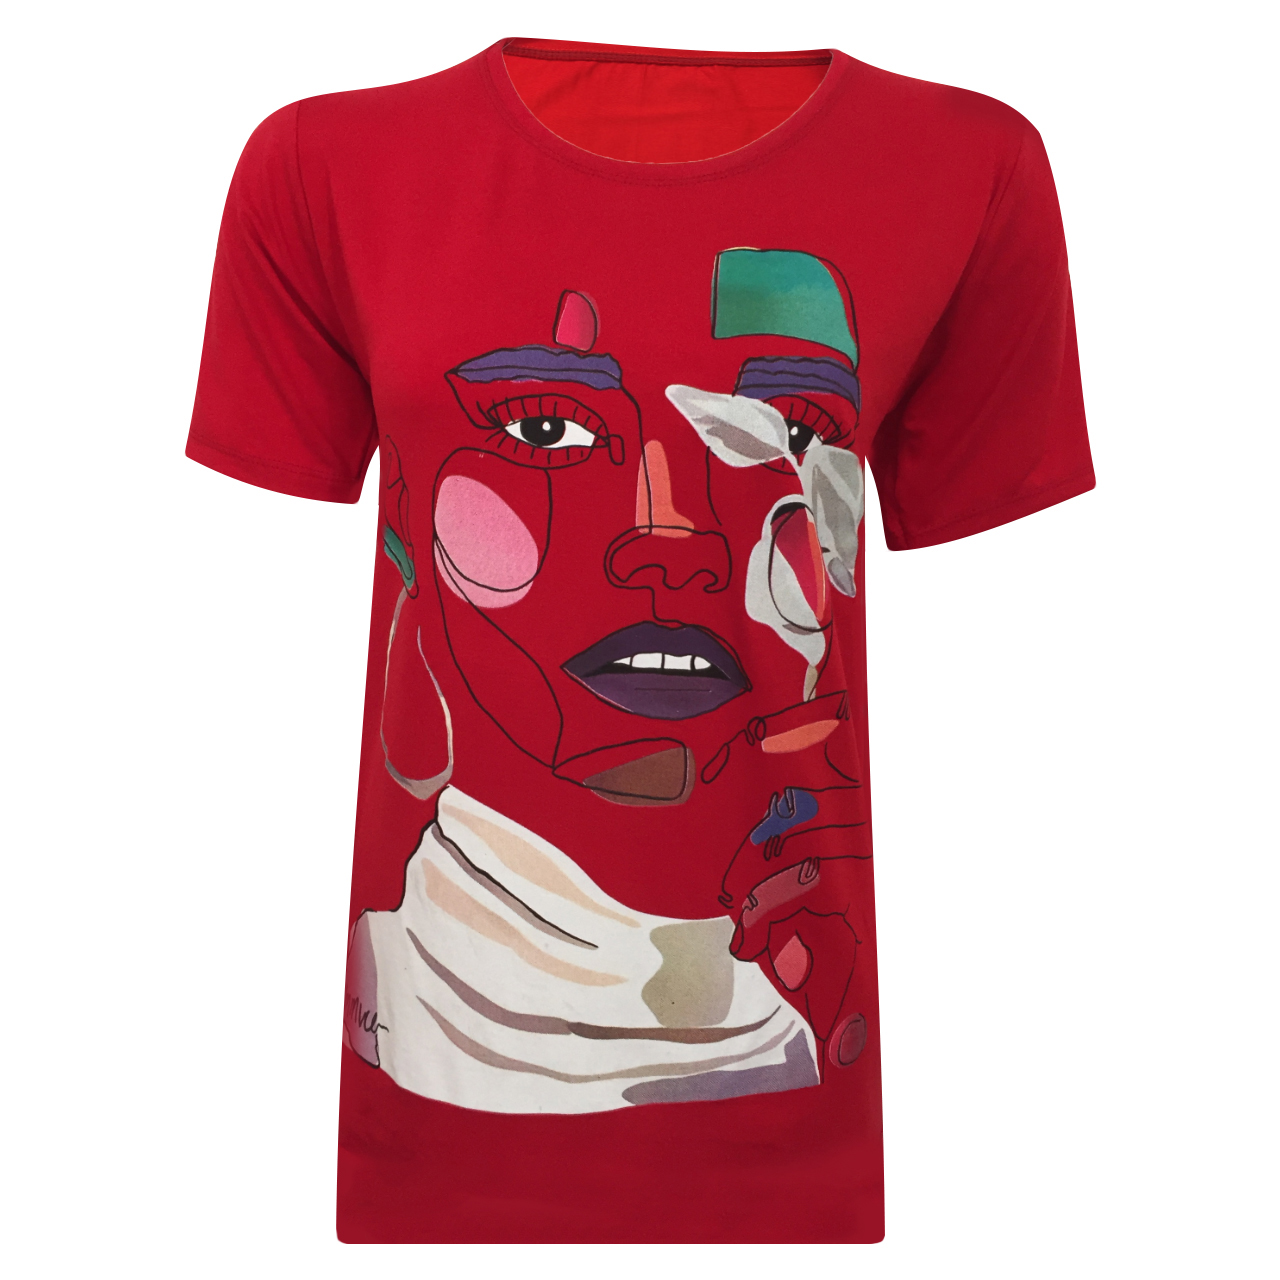 تی شرت آستین کوتاه زنانه مدل نخی ویسکوز چاپی چهره برتر کد tm-2319 رنگ قرمز